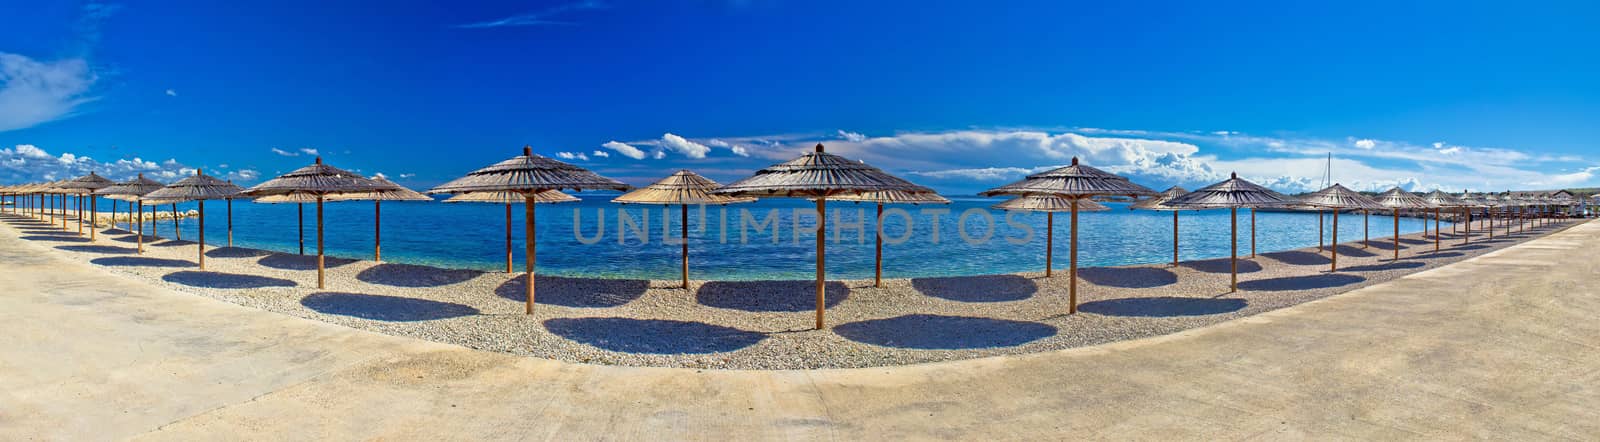 Beach umbrellas panoramic view, Vir island by xbrchx